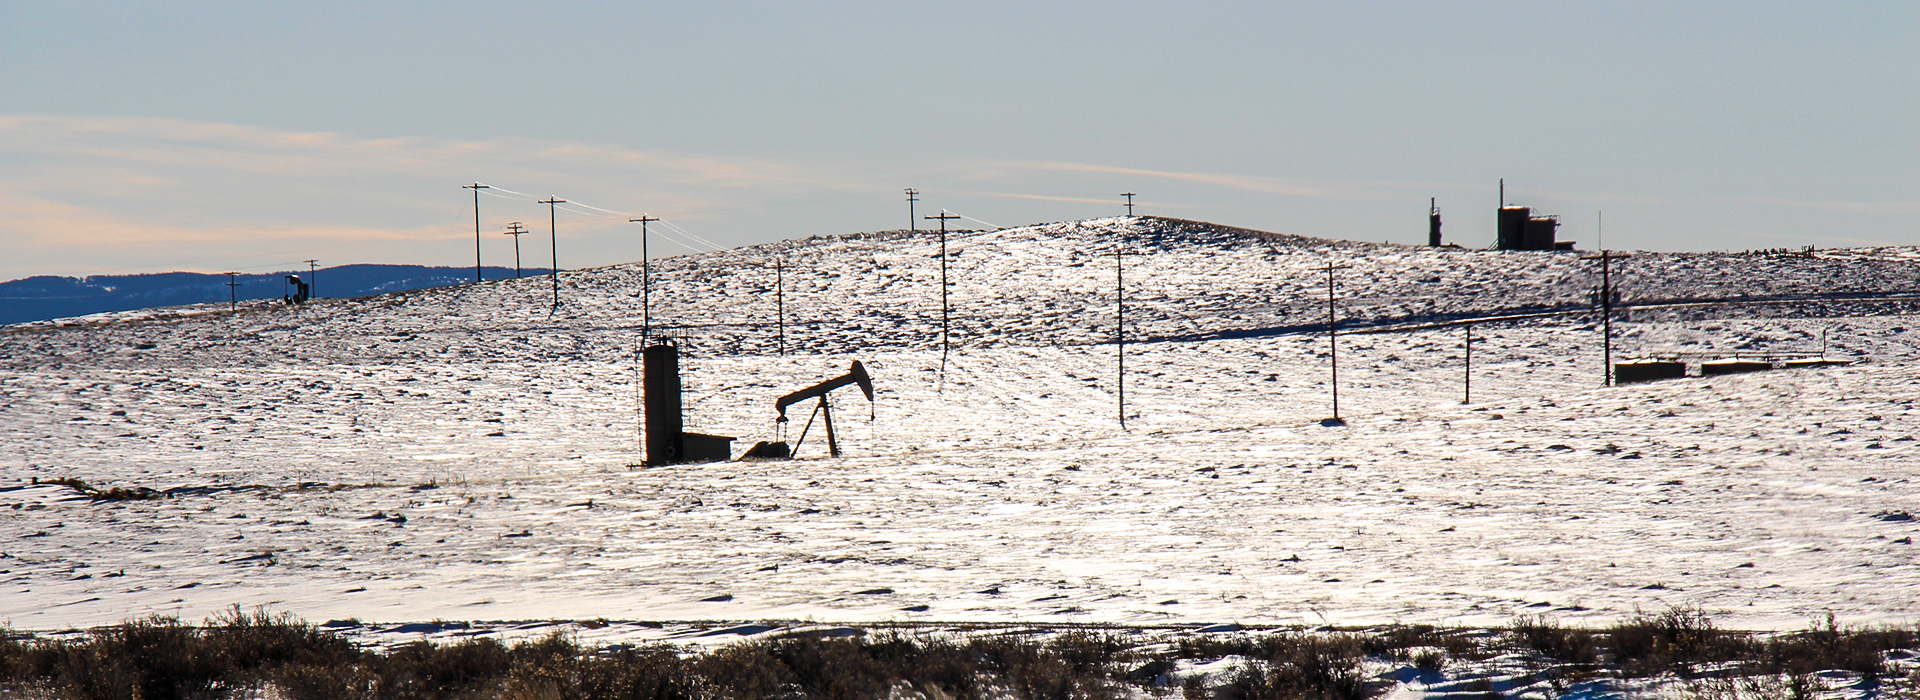 Wyoming Oil & Gas Field